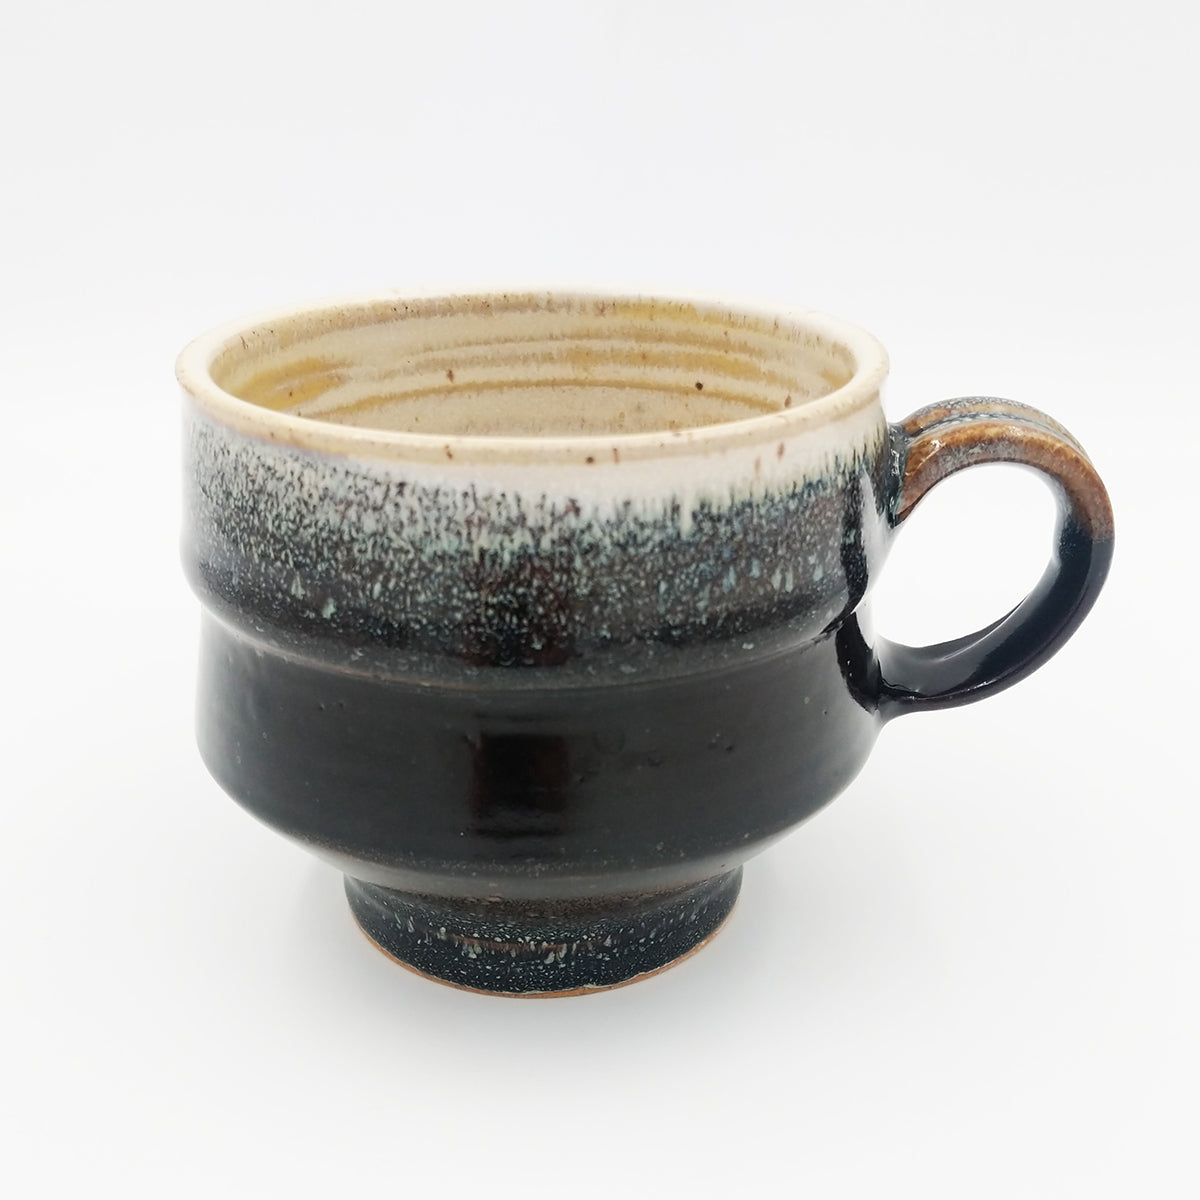 One of a kind, 12 oz Quart and Obsidian mug